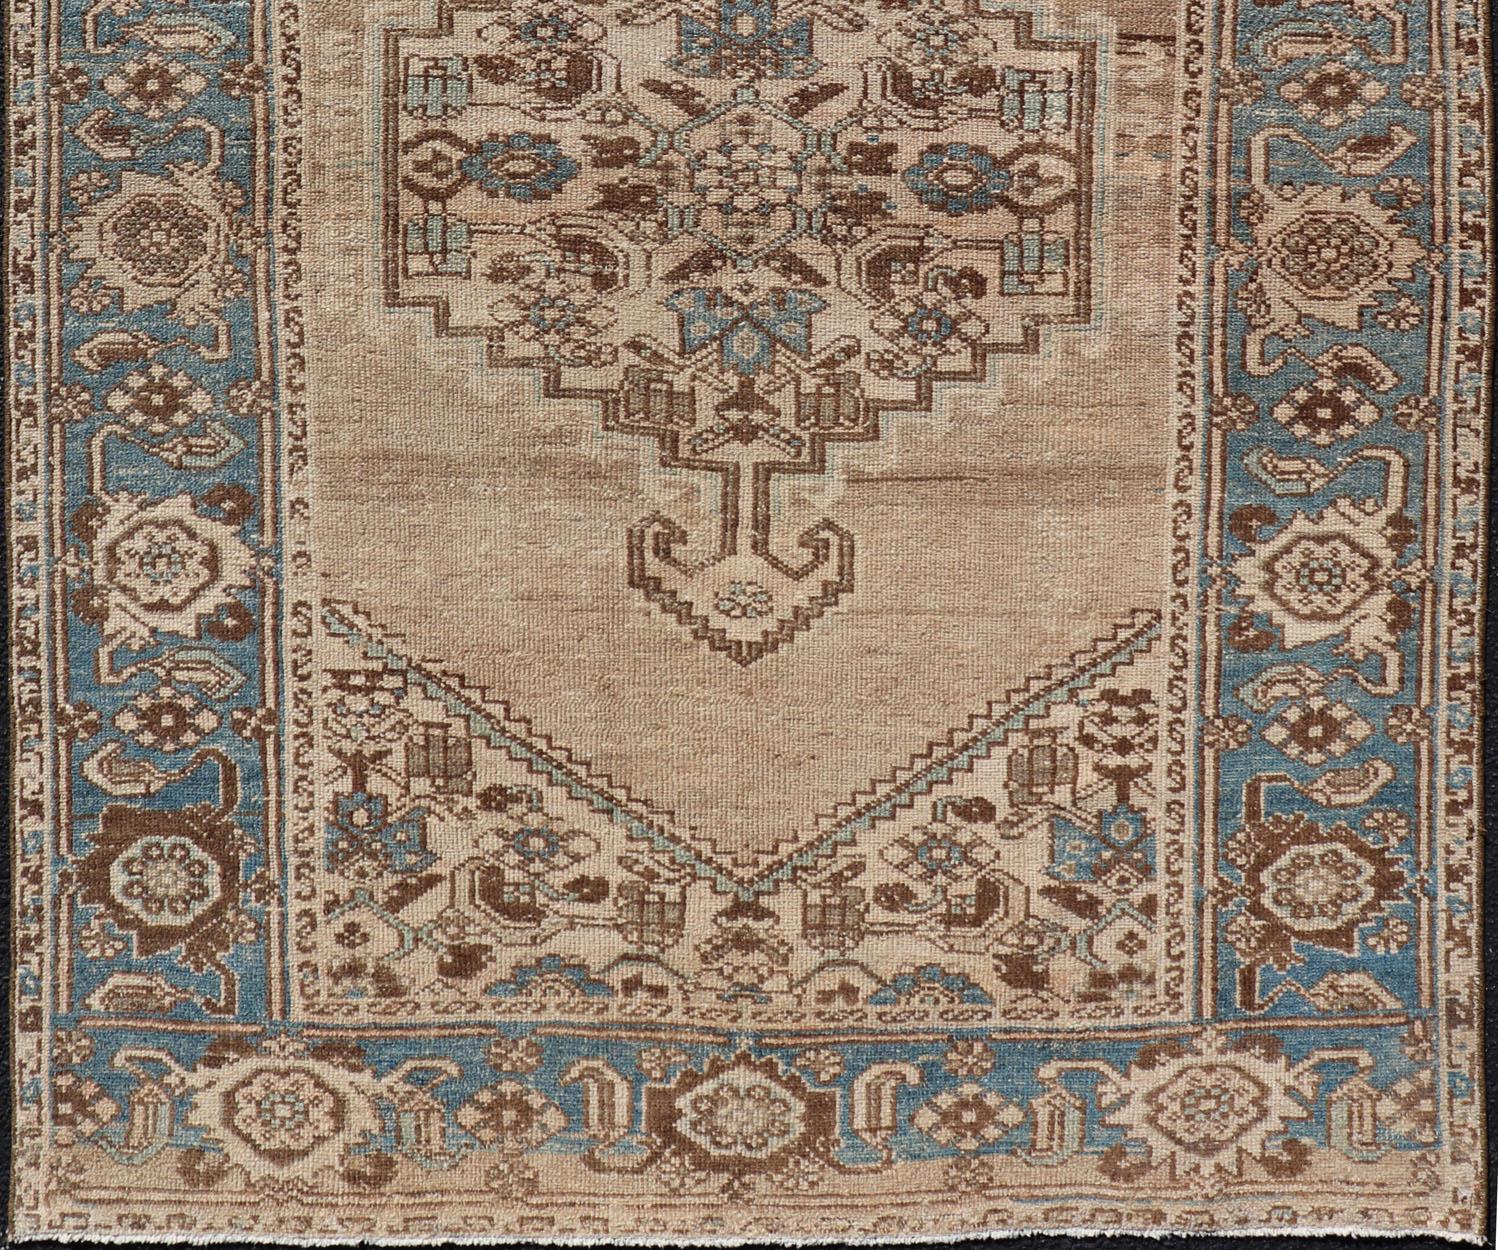 Tapis persan ancien Hamadan avec motif de médaillon en brun clair, bleu clair et marron en vente 1